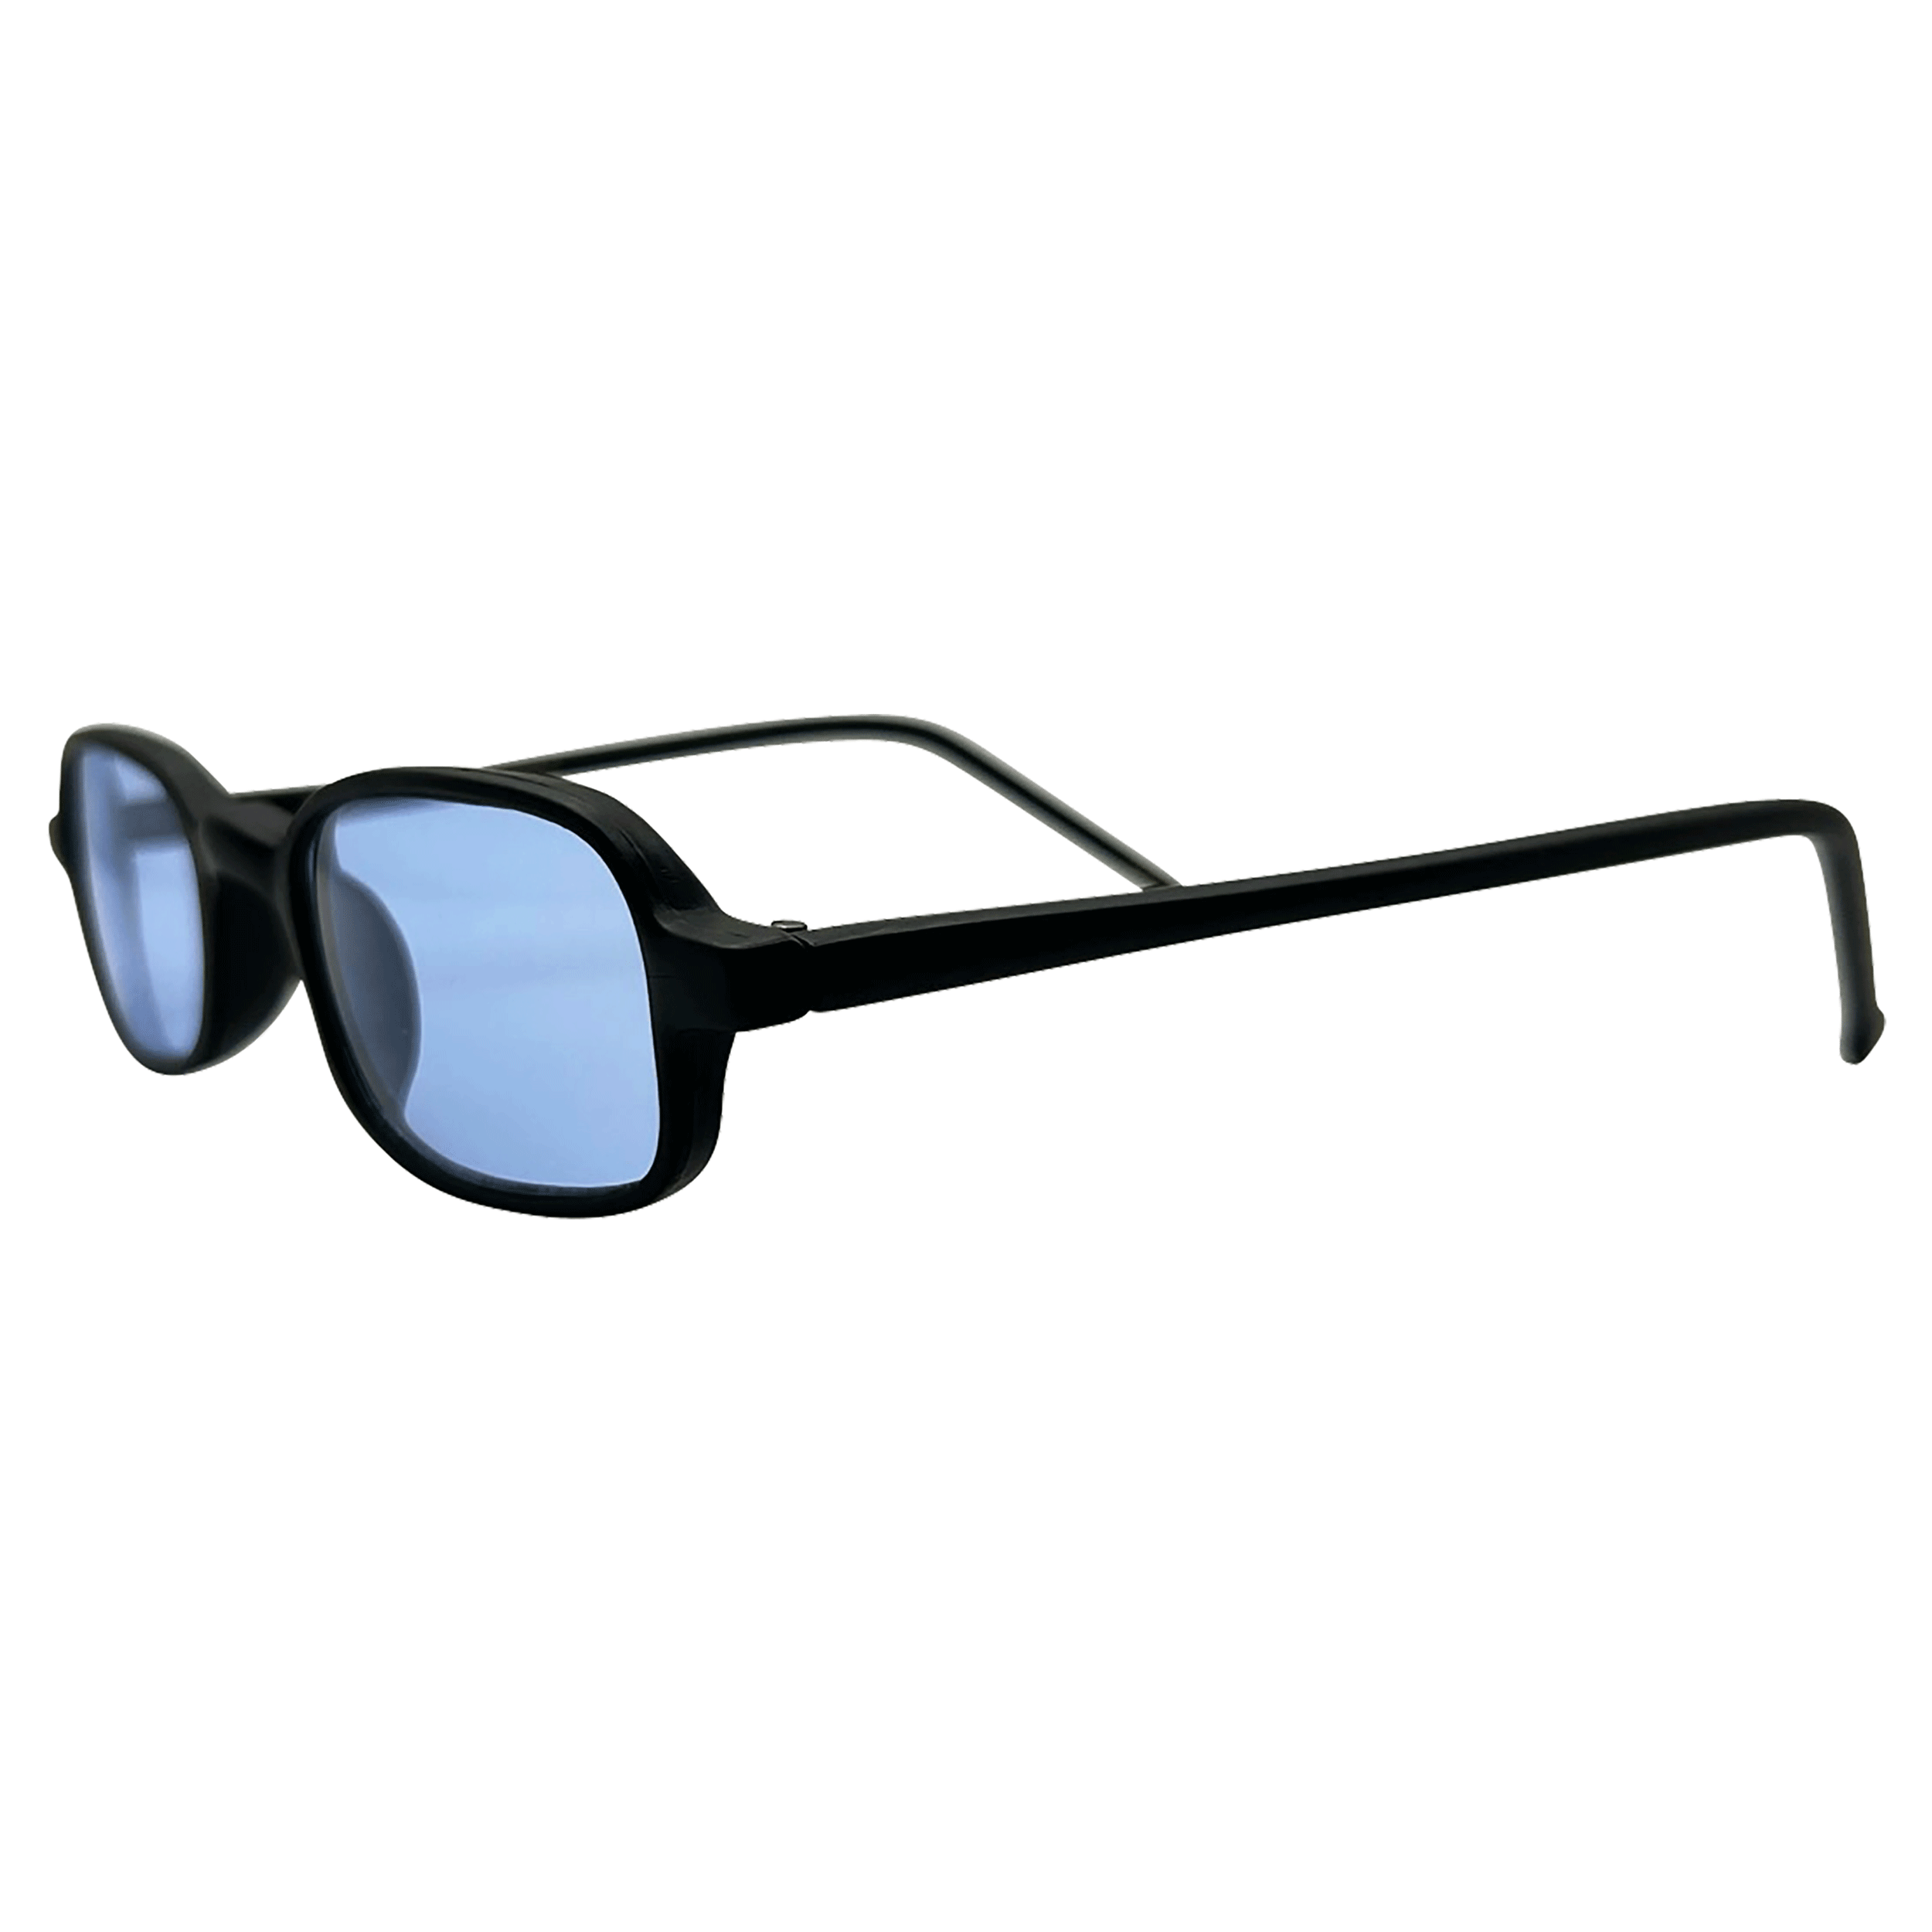 POPPIES Square Sunglasses